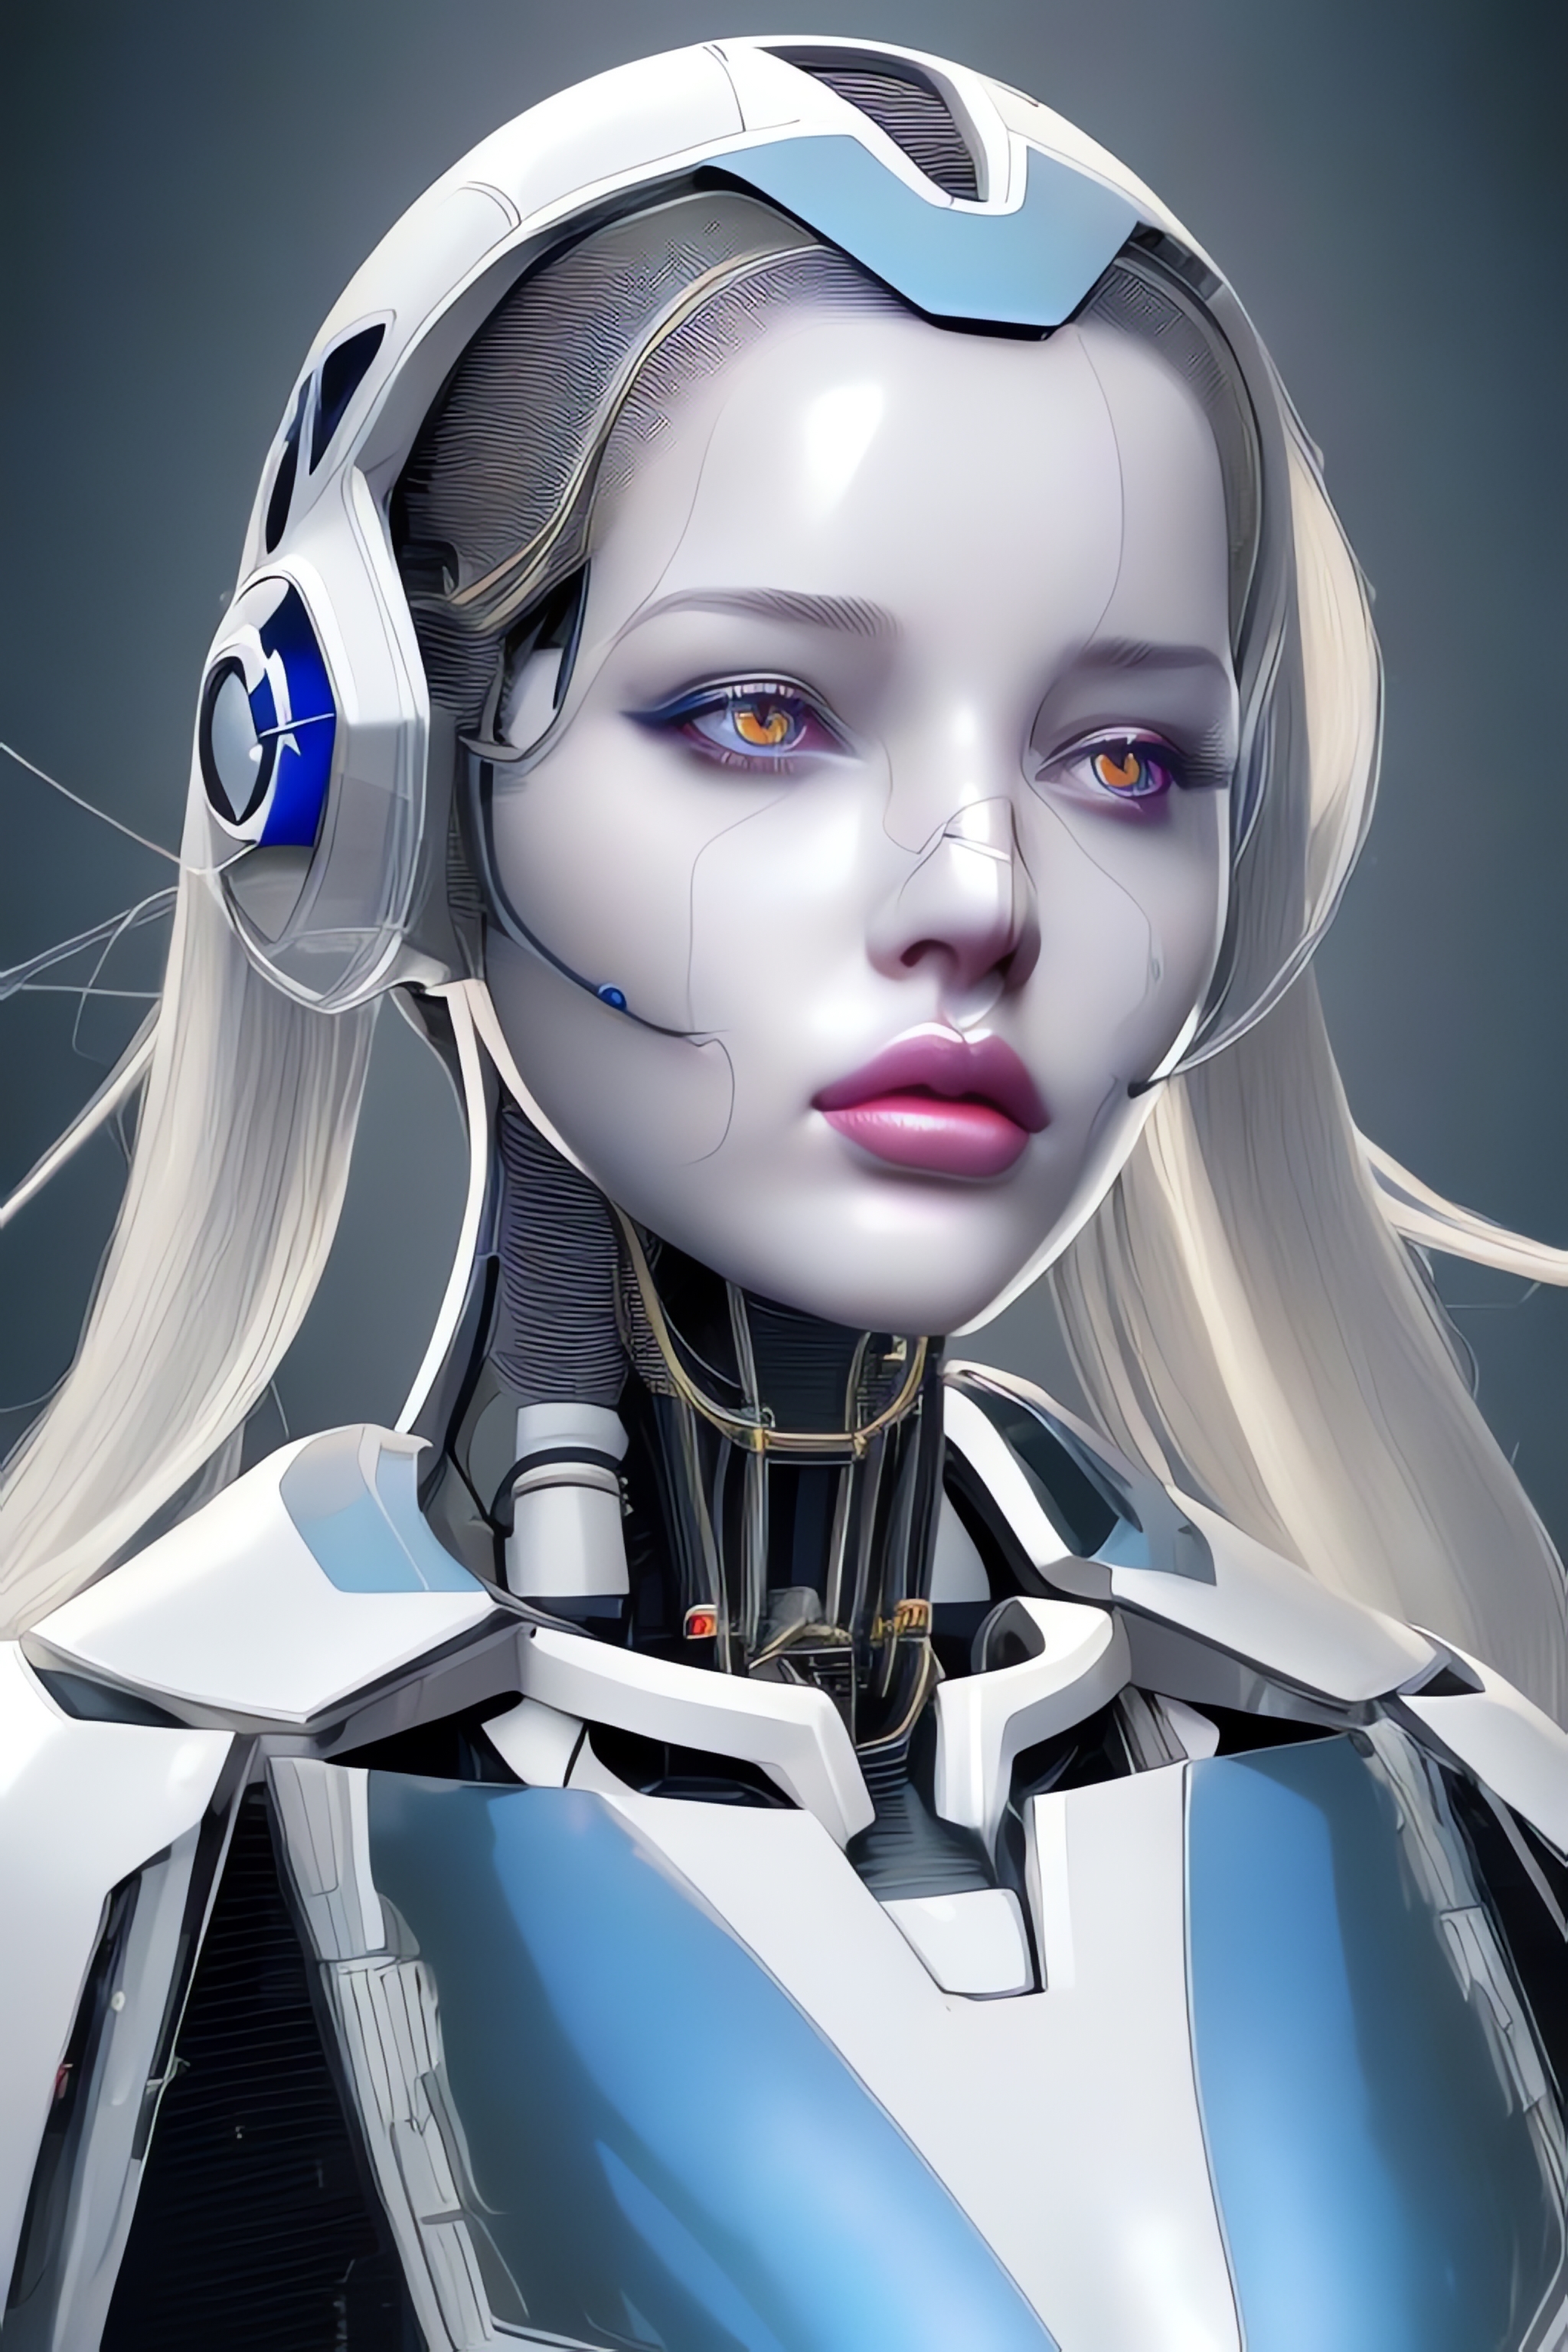 Humanoid robot concept design